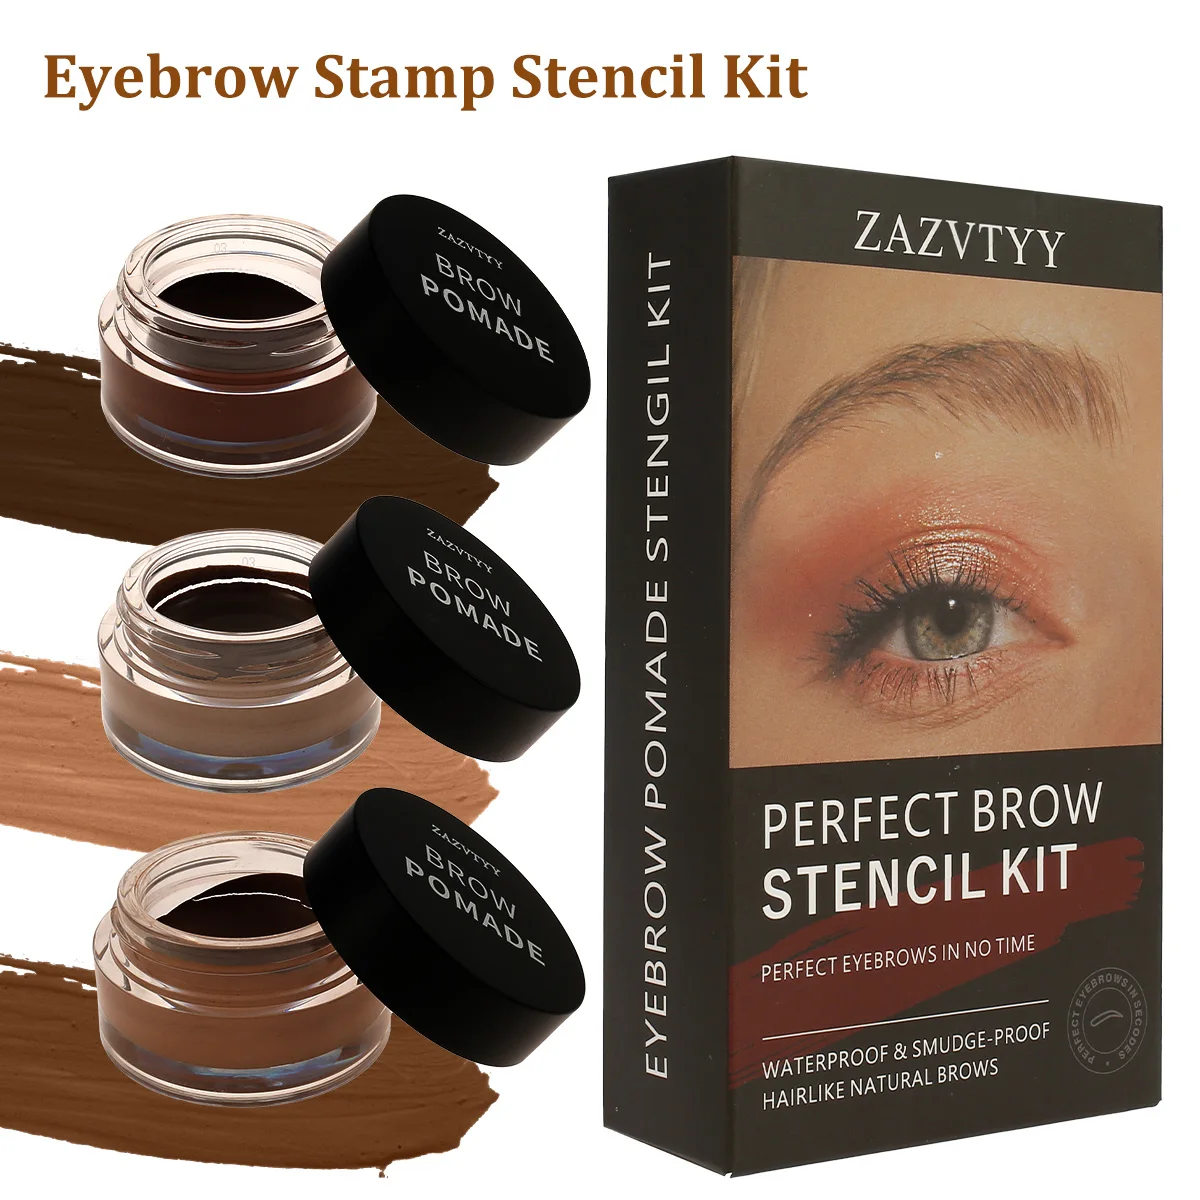 

Eyebrow Stamp Stencil Kit Waterproof Eye Brow Stamping Set with 10 Reusable Brow Stencils Sponge Applicator Long-Lasting Eyebrow